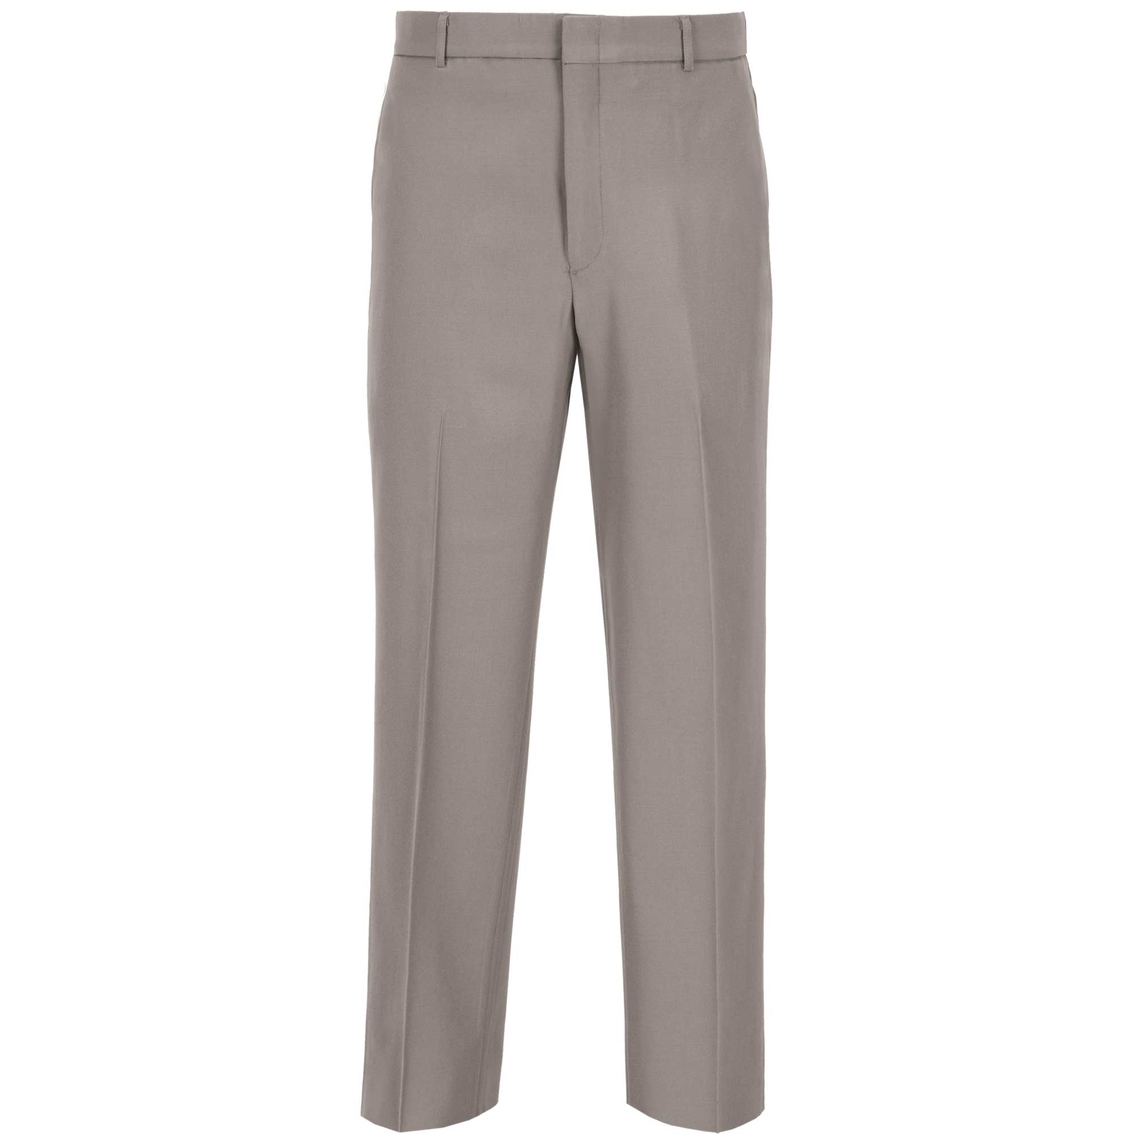 Dla Classic Fit Trousers (agsu), Uniforms, Military